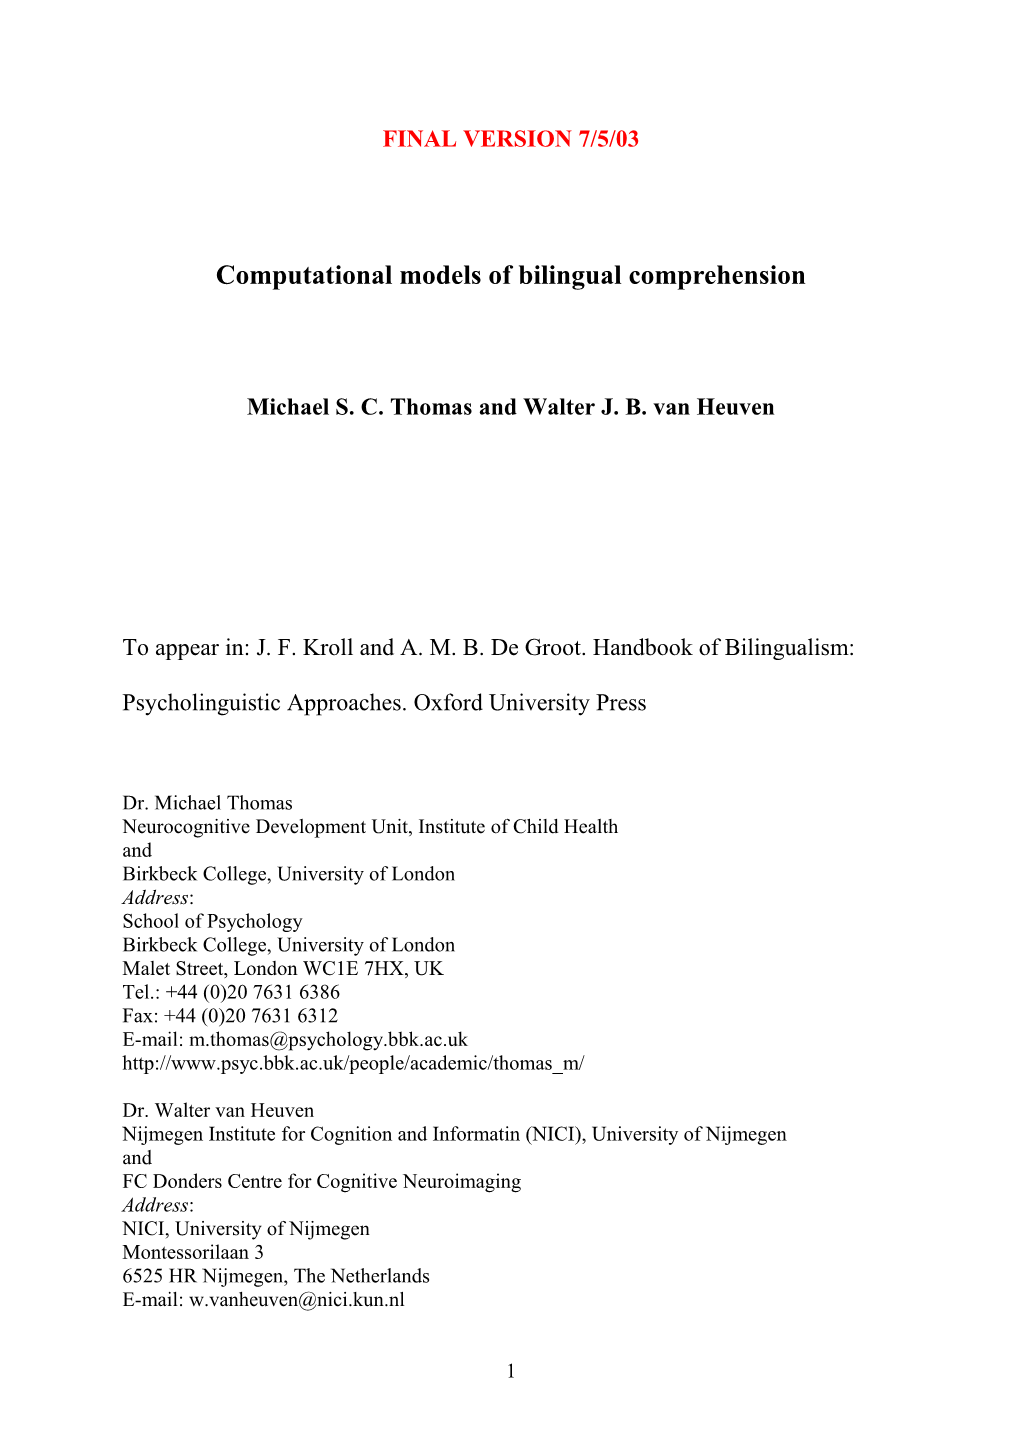 Computational Models of Bilingual Comprehension